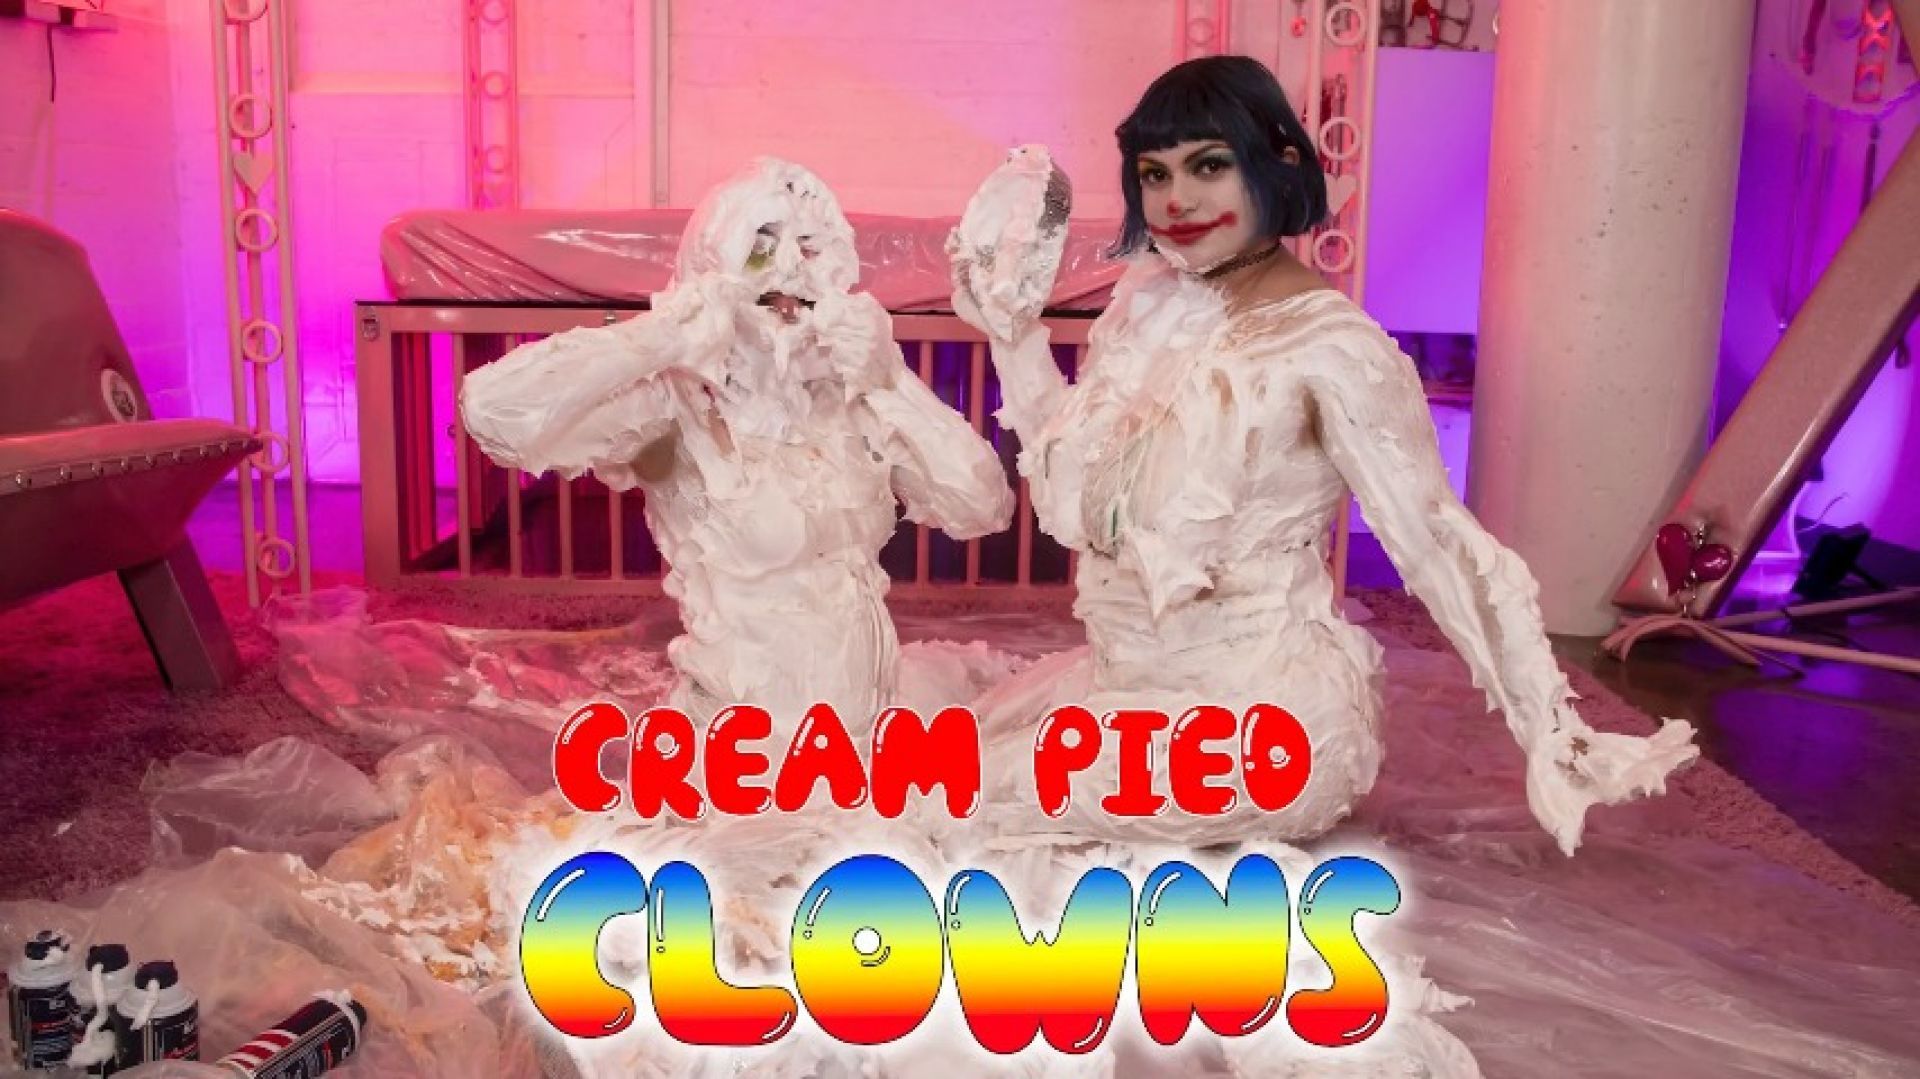 Cream Pied Clowns